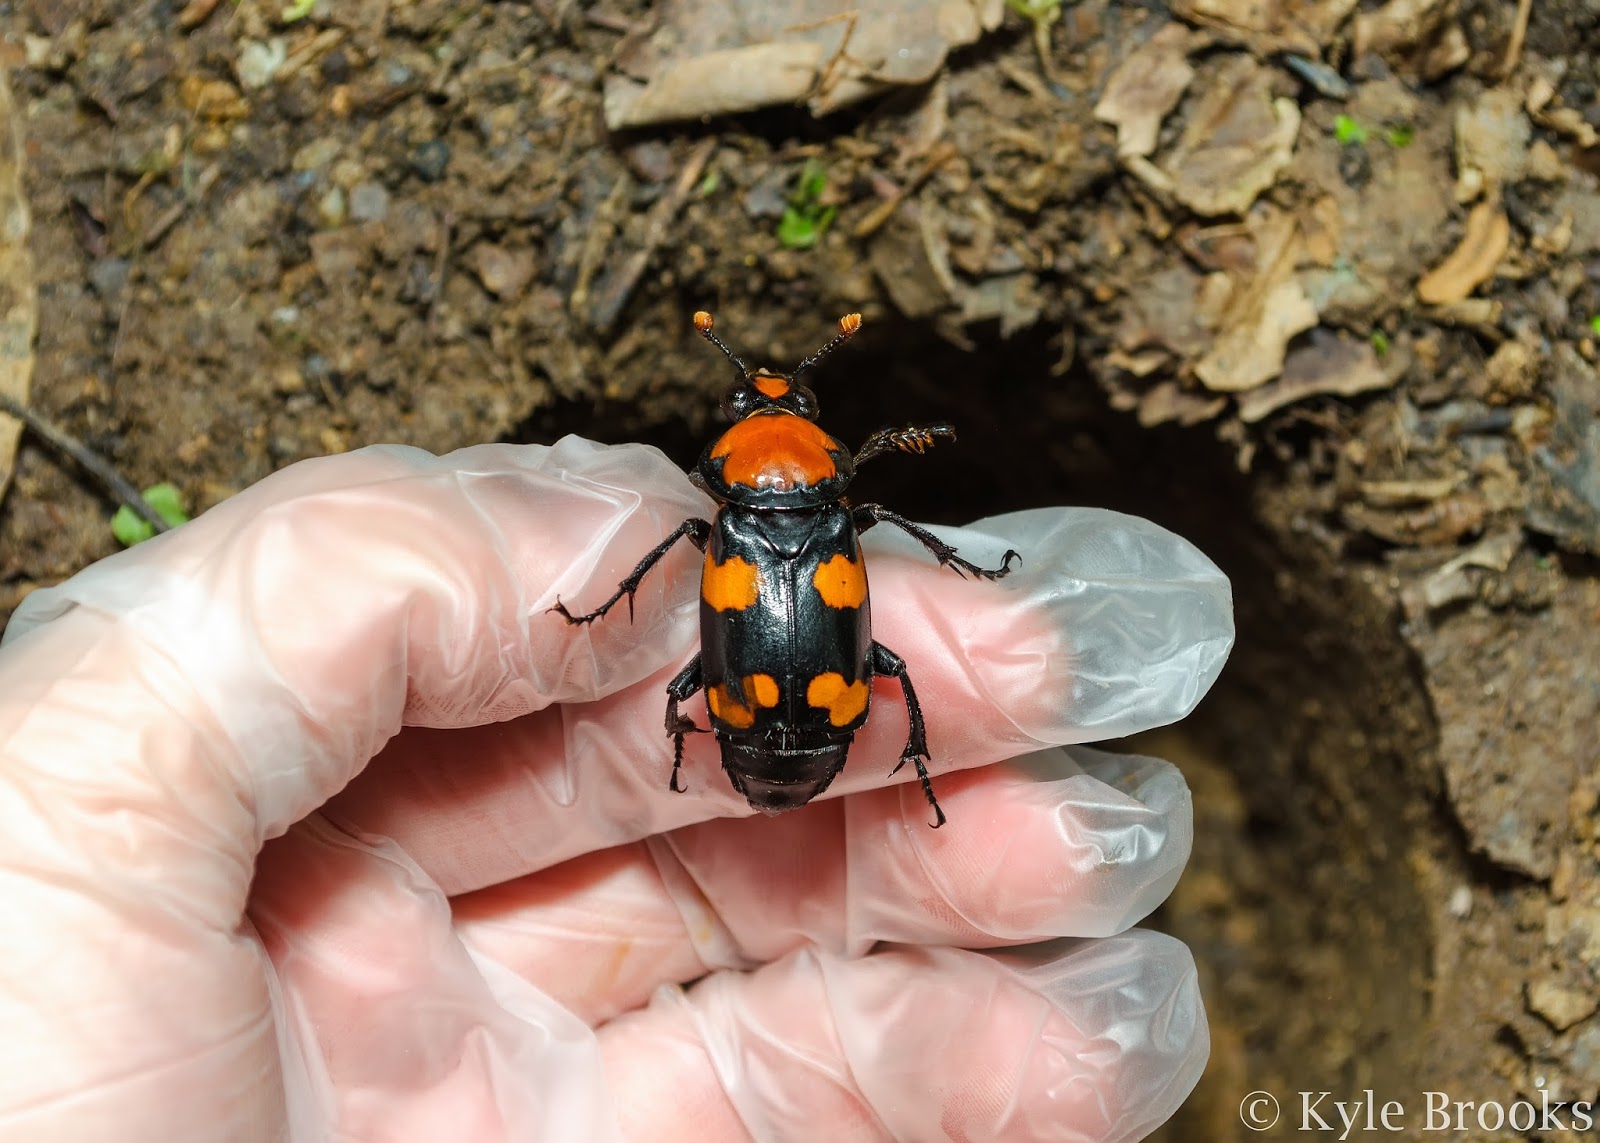 American Burying Beetle Nicrophorus americanus